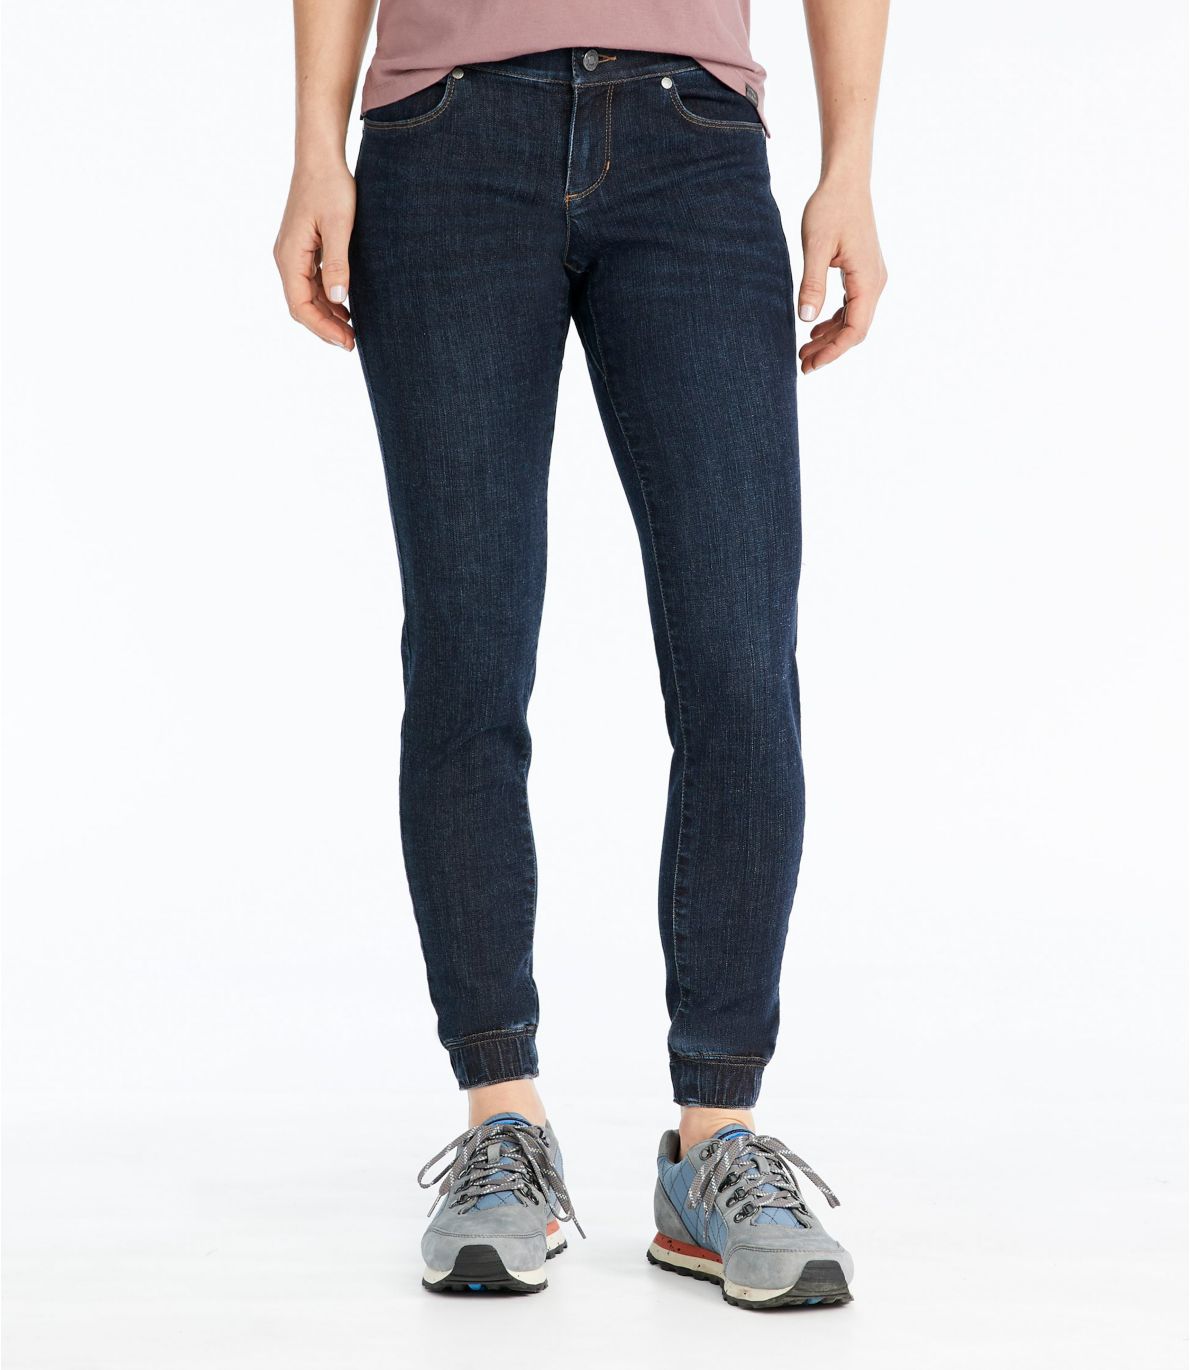 Women's L.L.Bean Performance Stretch Jeans, Joggers